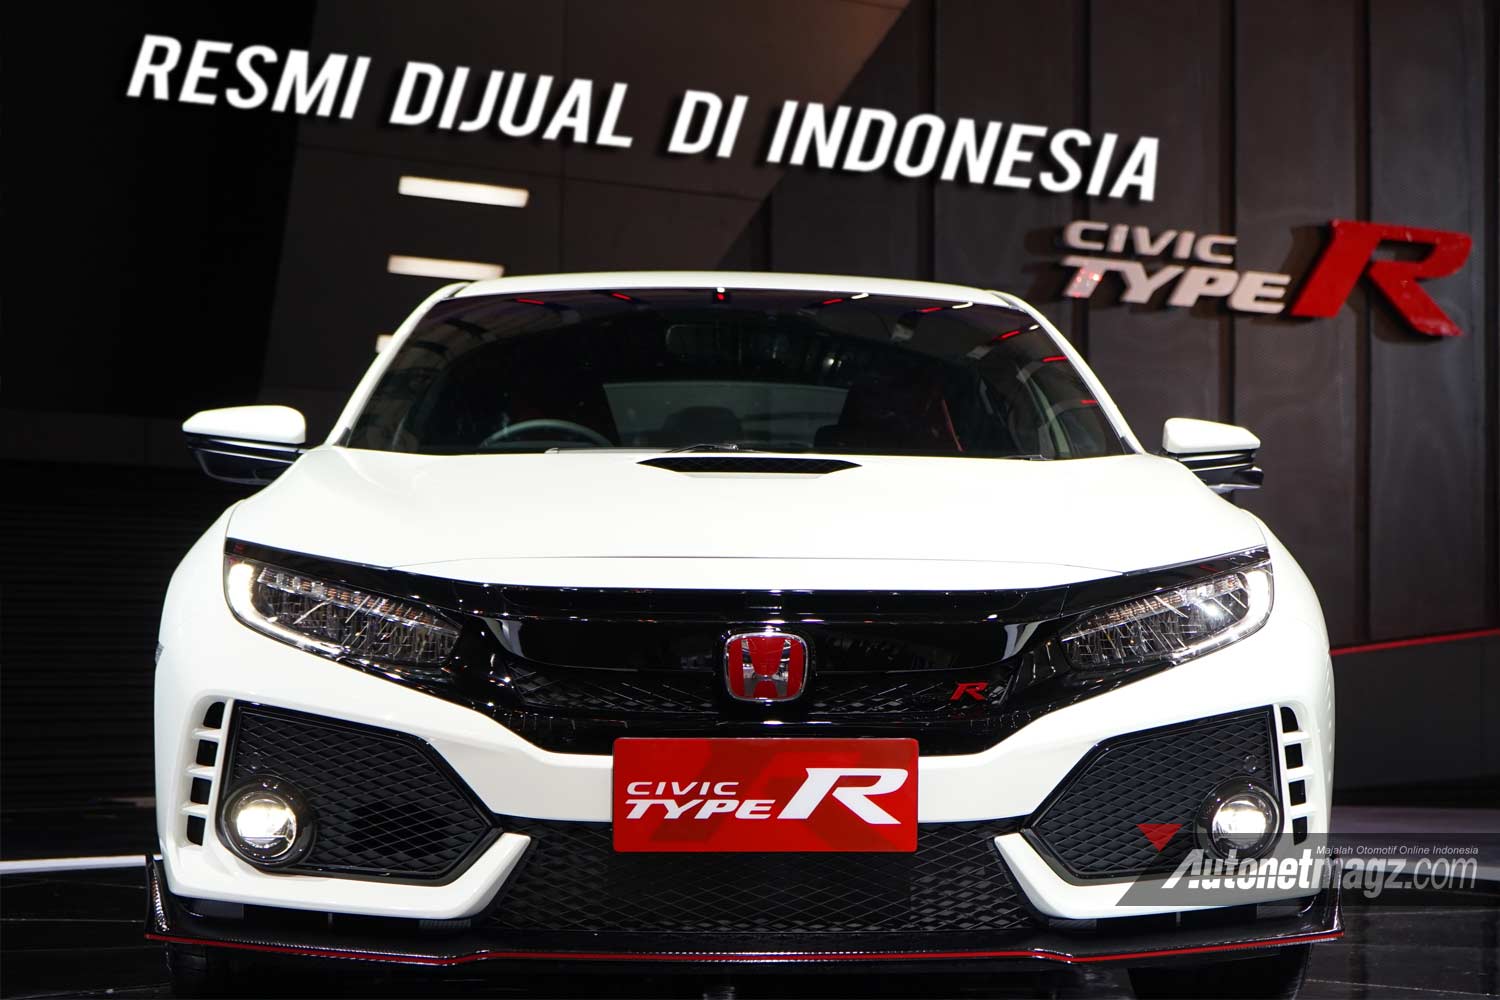 GIIAS 2017, Civic-Type-R-Indonesia-2017: GIIAS 2017 : Honda Civic Type R FK8 Resmi Dijual di Indonesia!